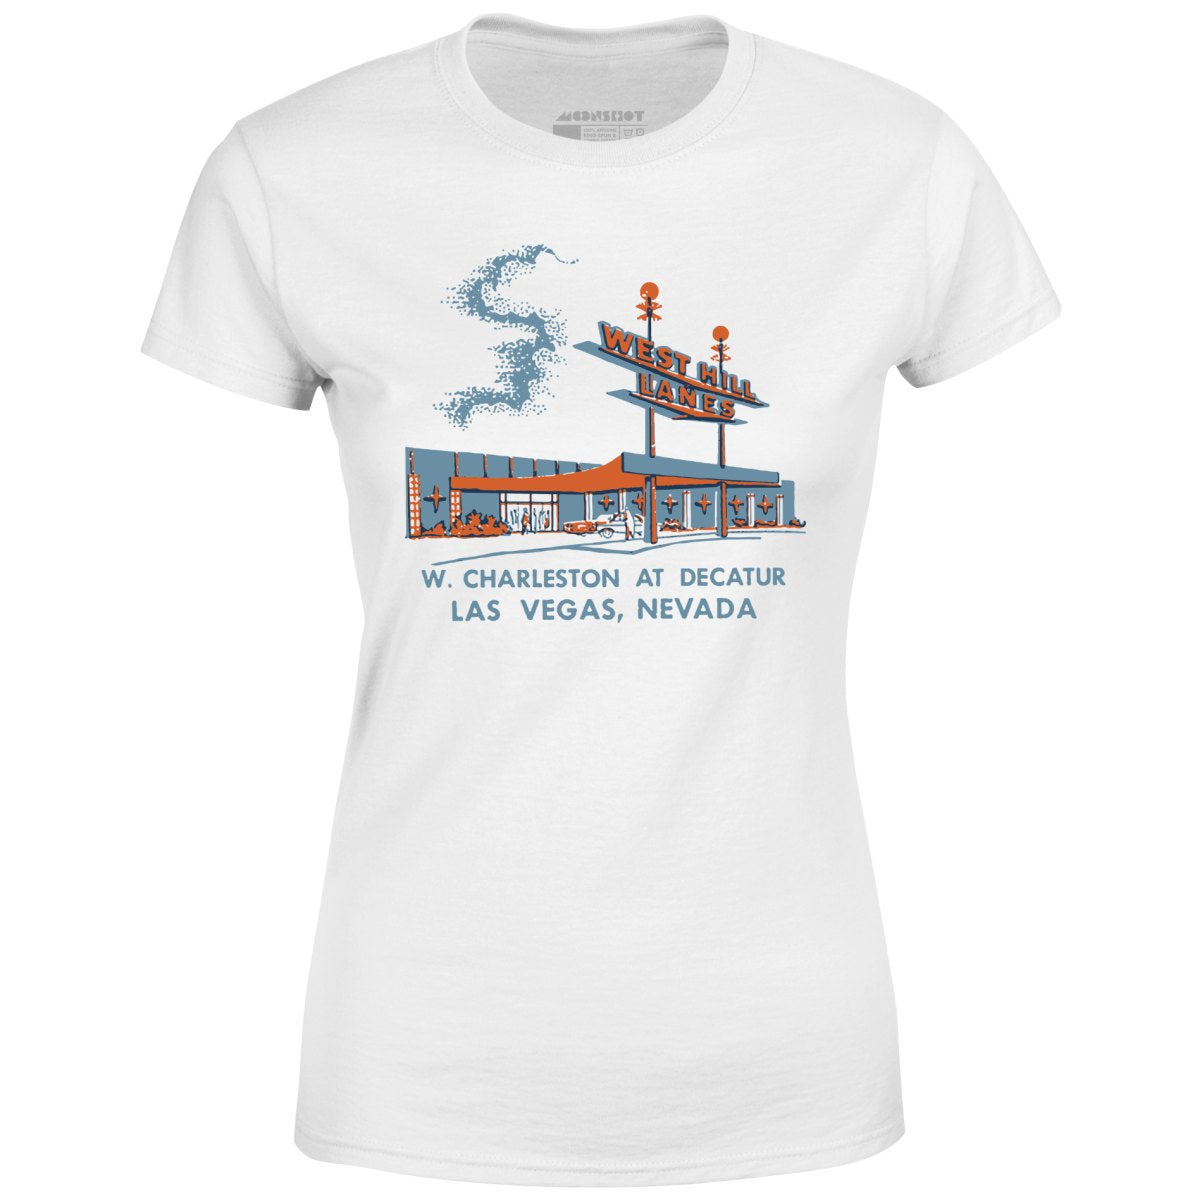 West Hill Lanes - Las Vegas, NV - Vintage Bowling Alley - Women's T-Shirt